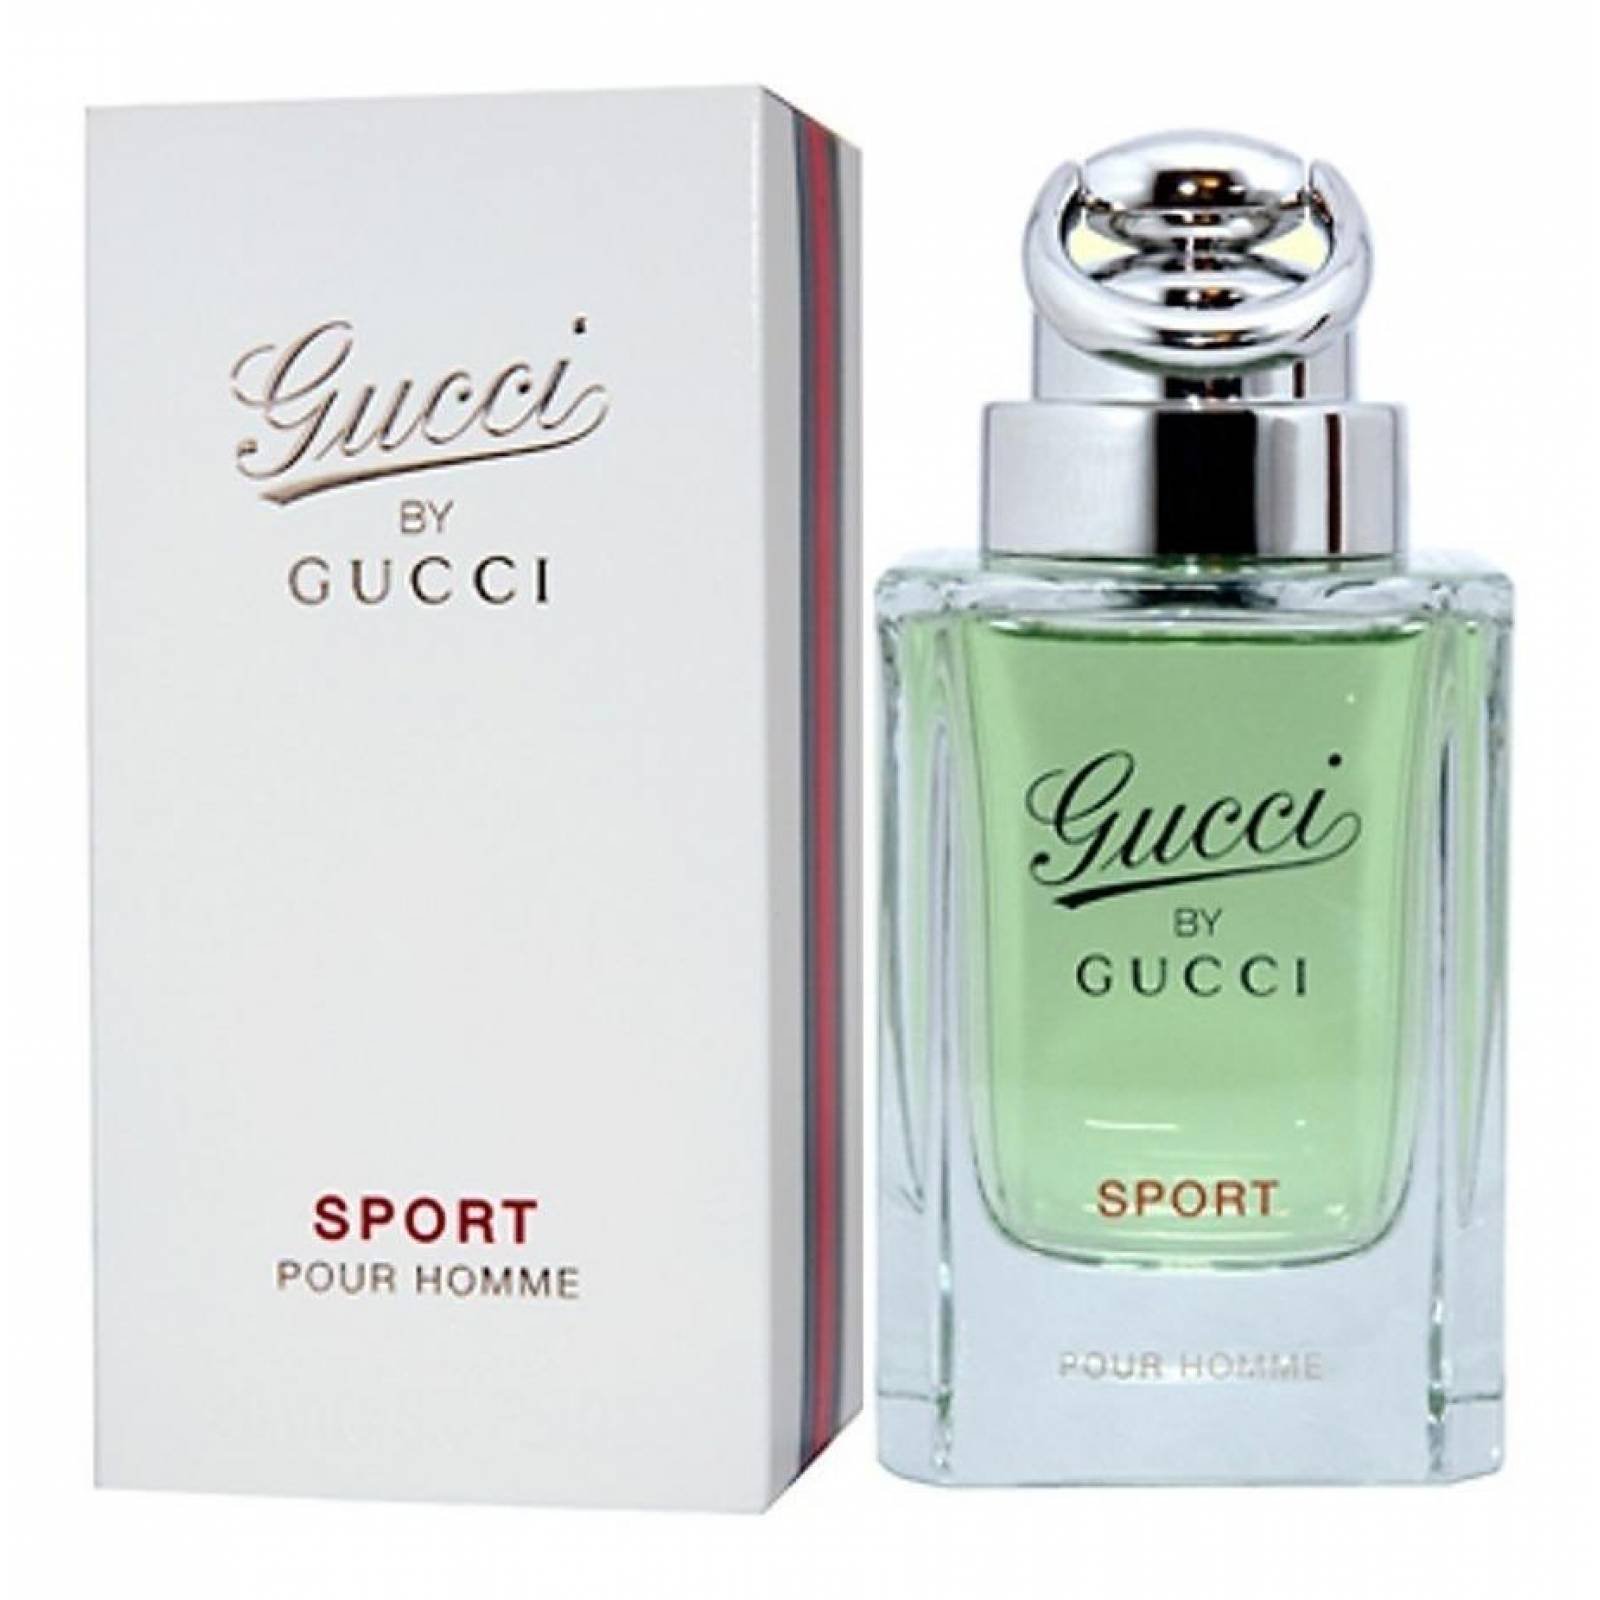 Gucci Sport de Gucci Caballero de 90 ml